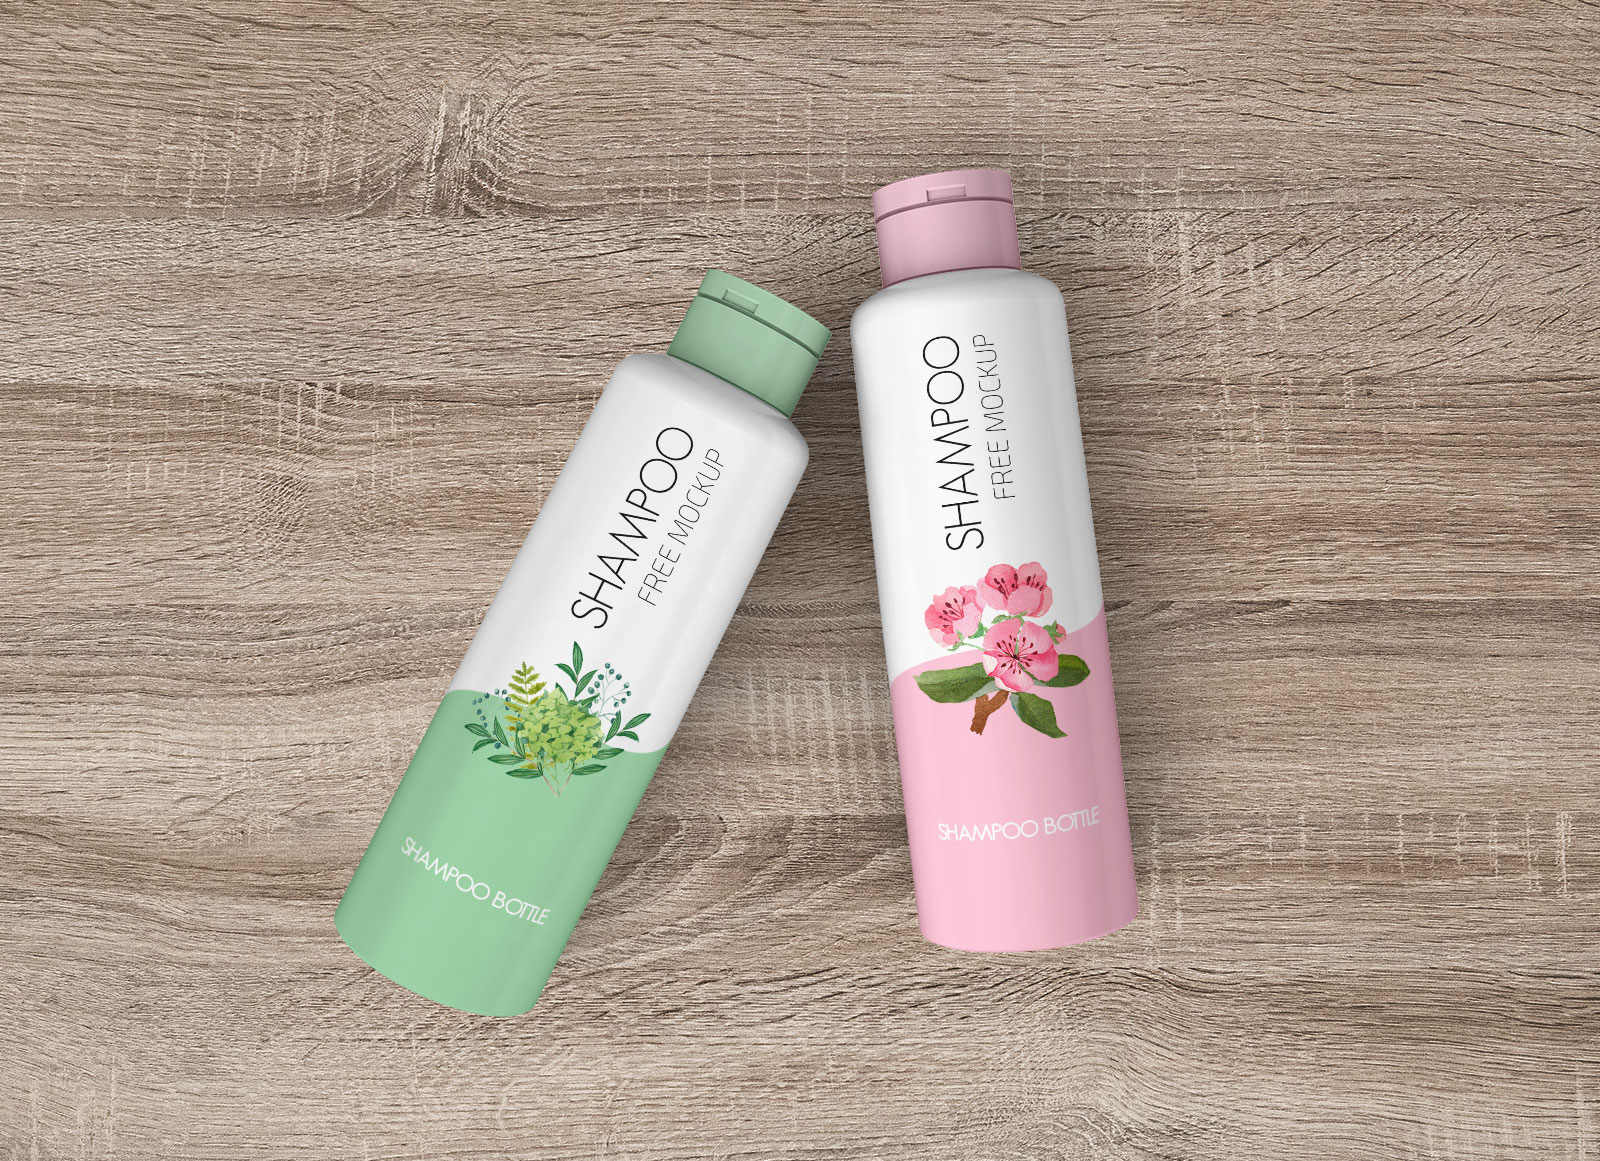 Download Free Cosmetic Cream / Shampoo Bottle Mockup PSD Set - Good Mockups